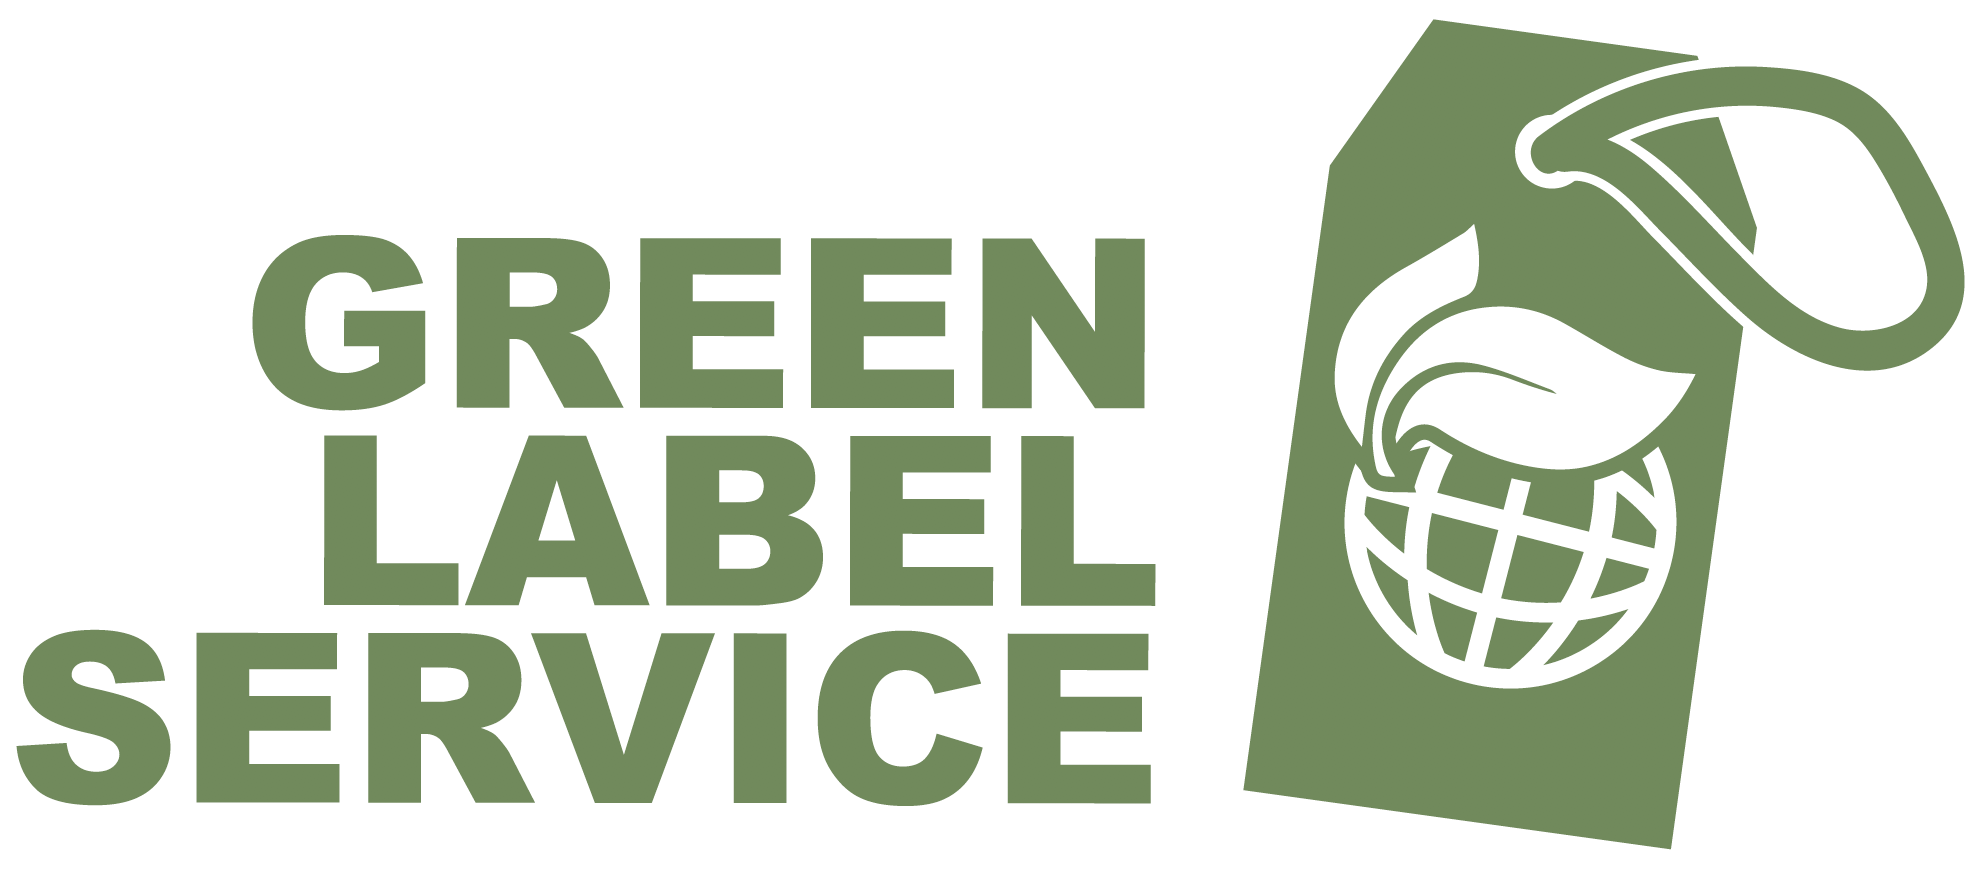 Green Label Service